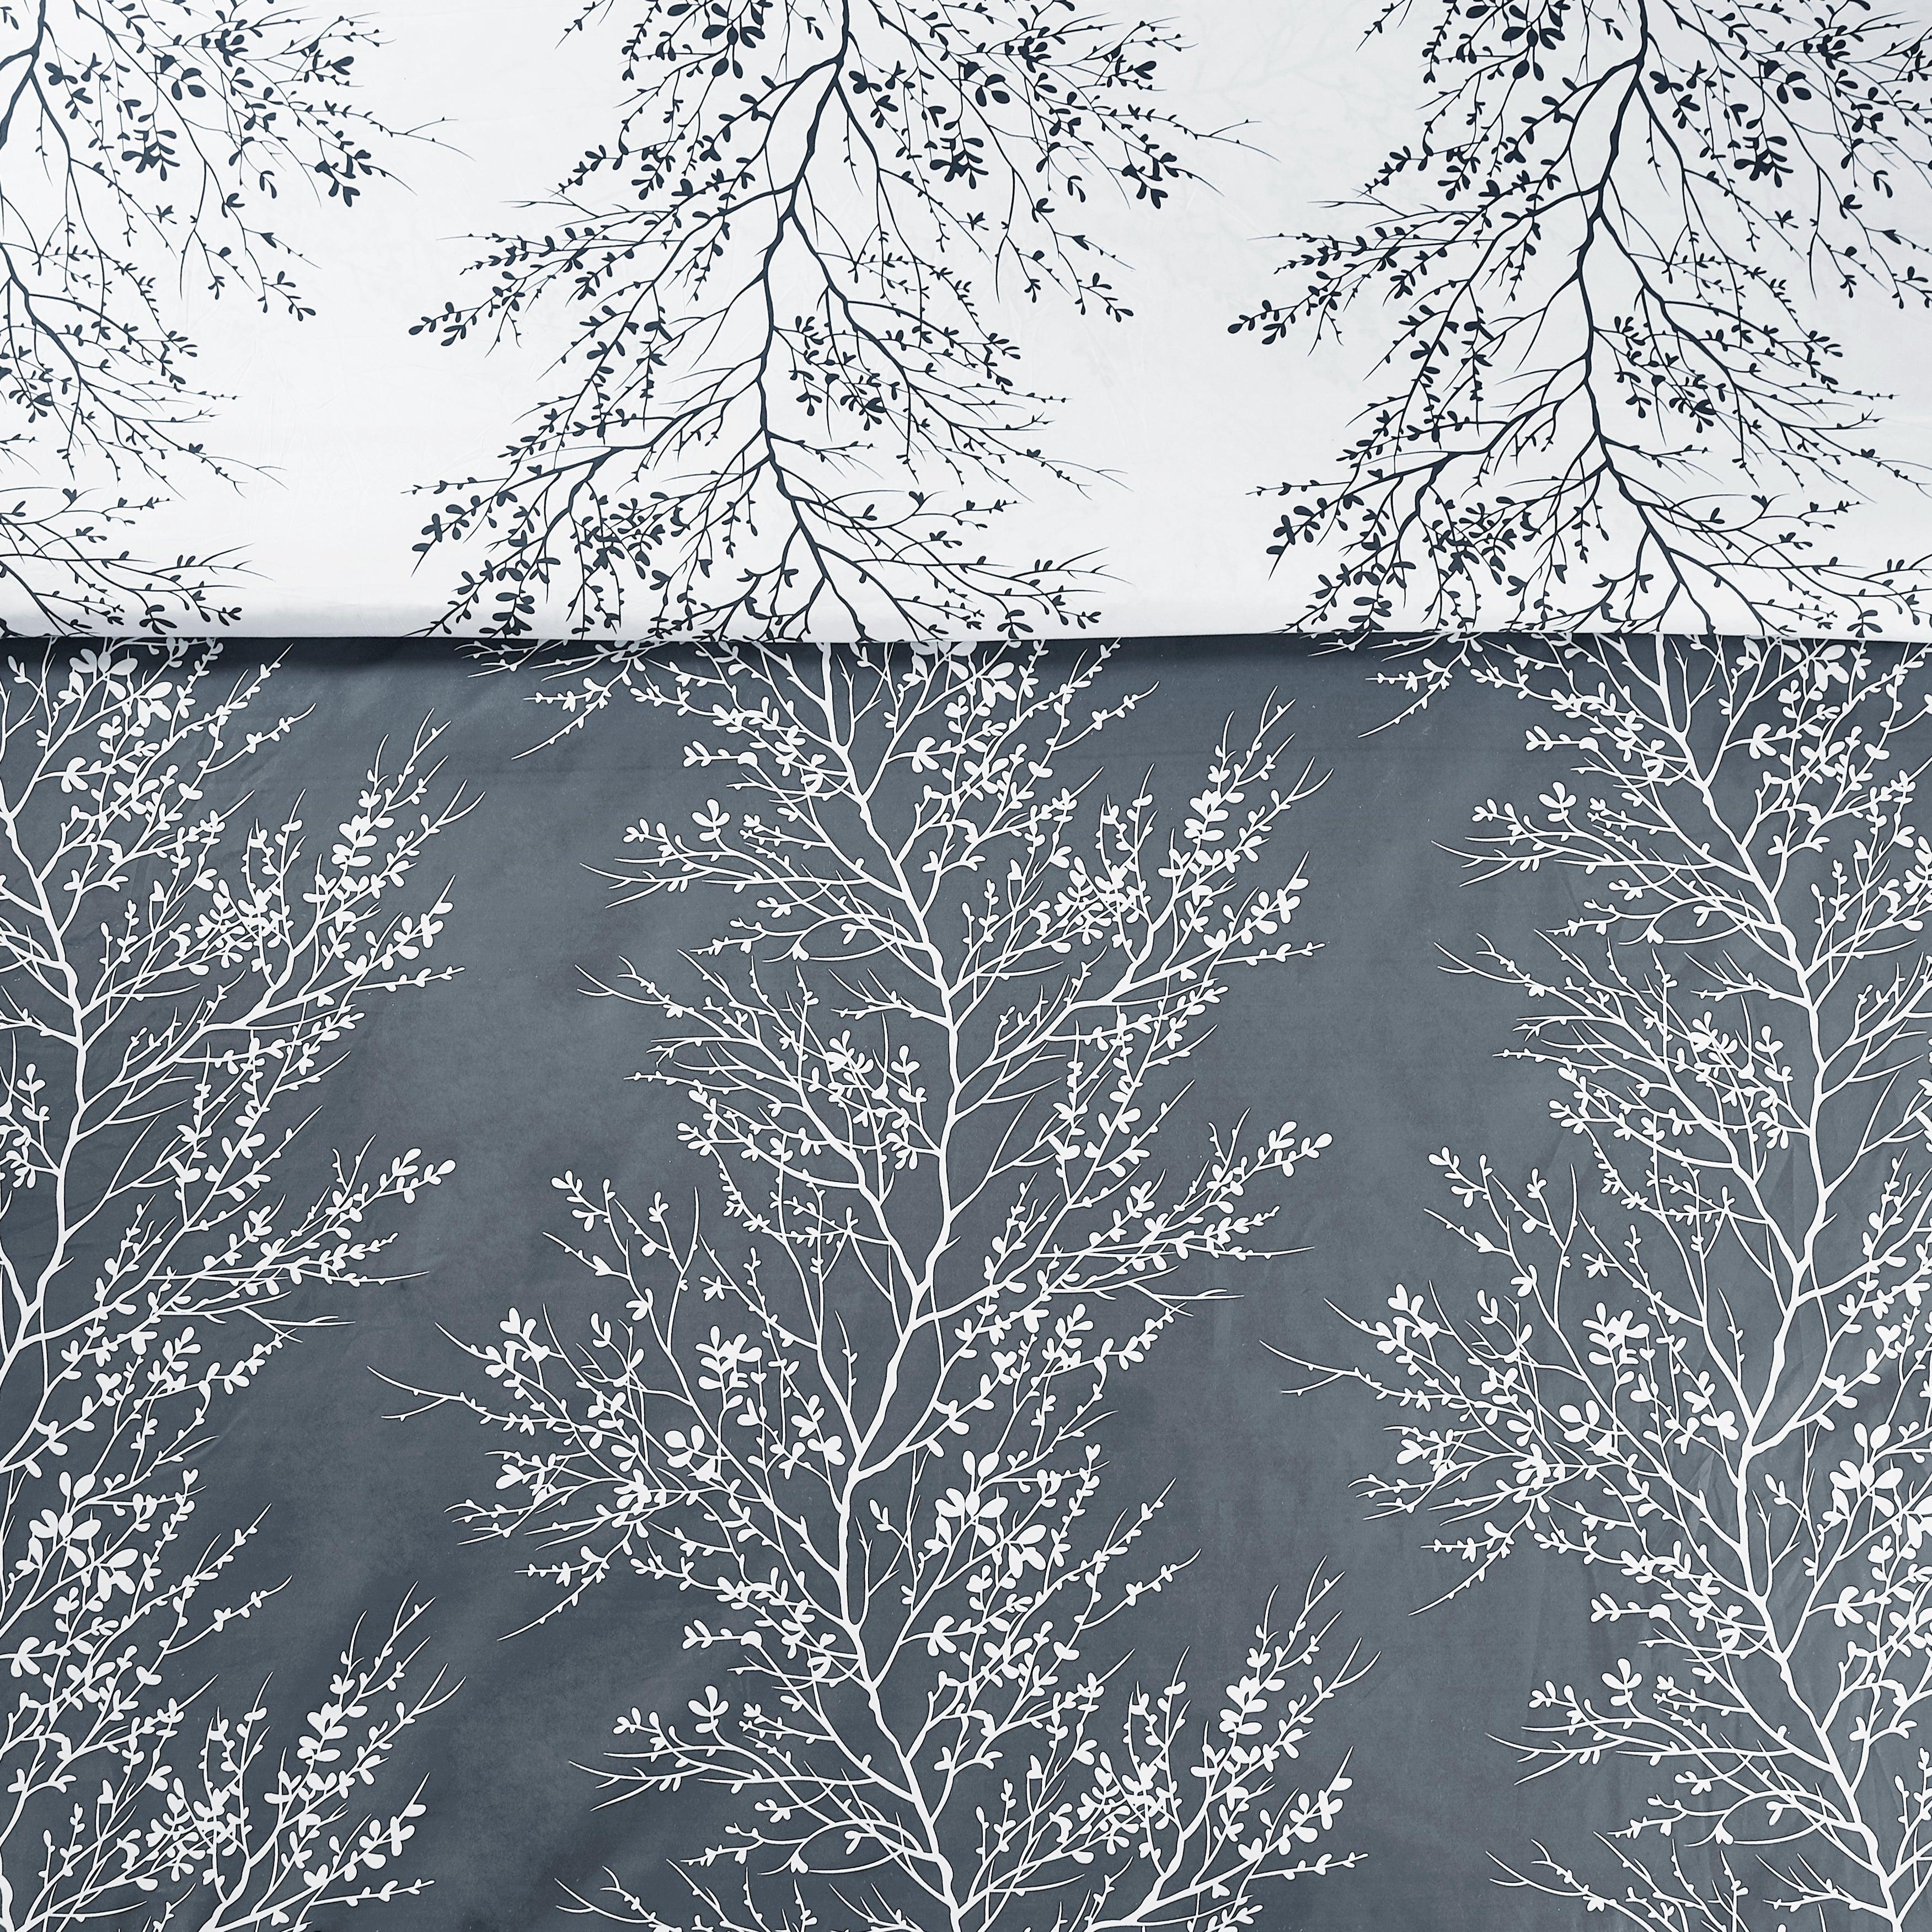 Foliage Reversible Comforter Set + Two Free Sham Pillows - Spirit Linen - Gray